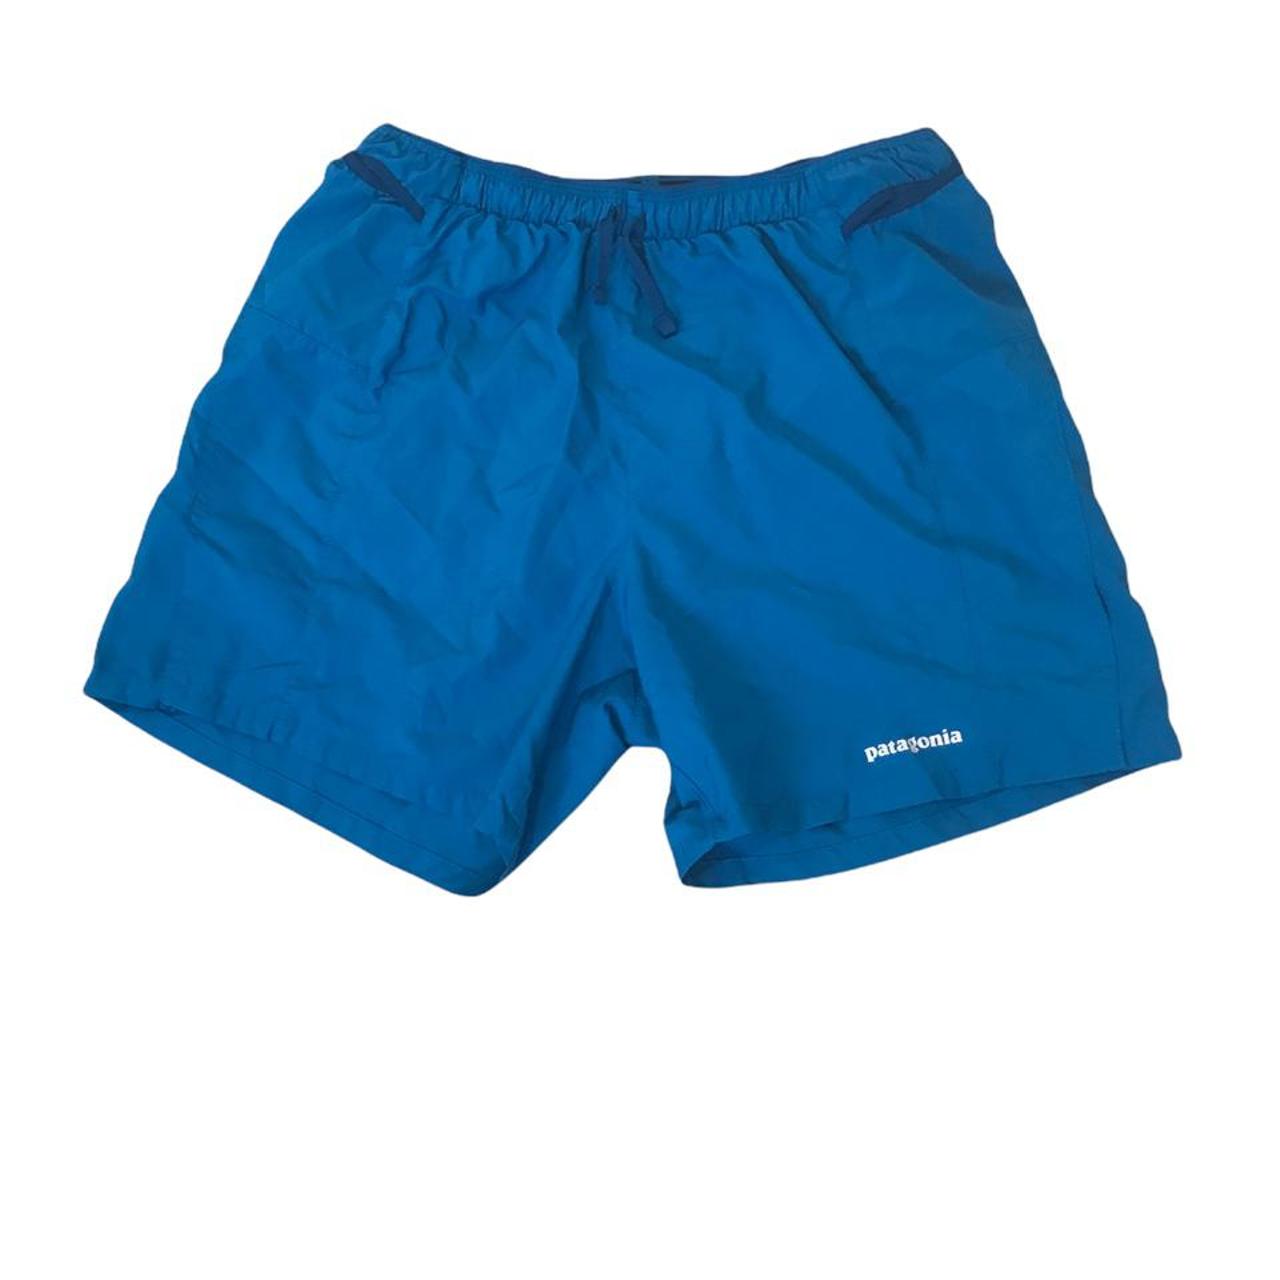 Product Image 1 - Patagonia Running Shorts 

- Size